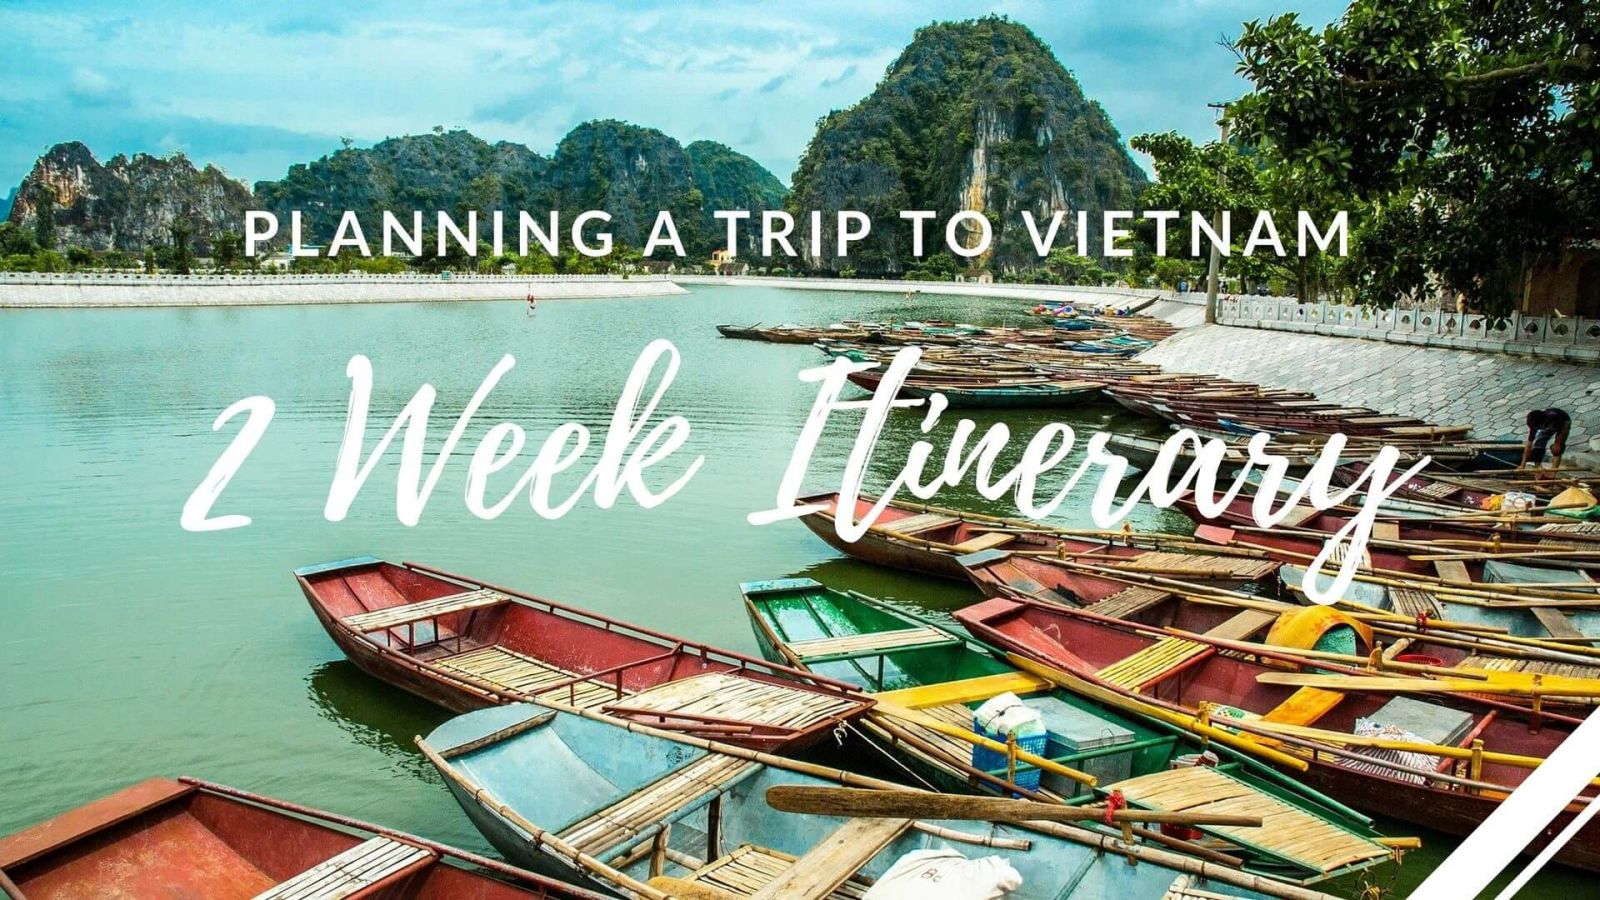 Plan a trip to Vietnam in 2 week